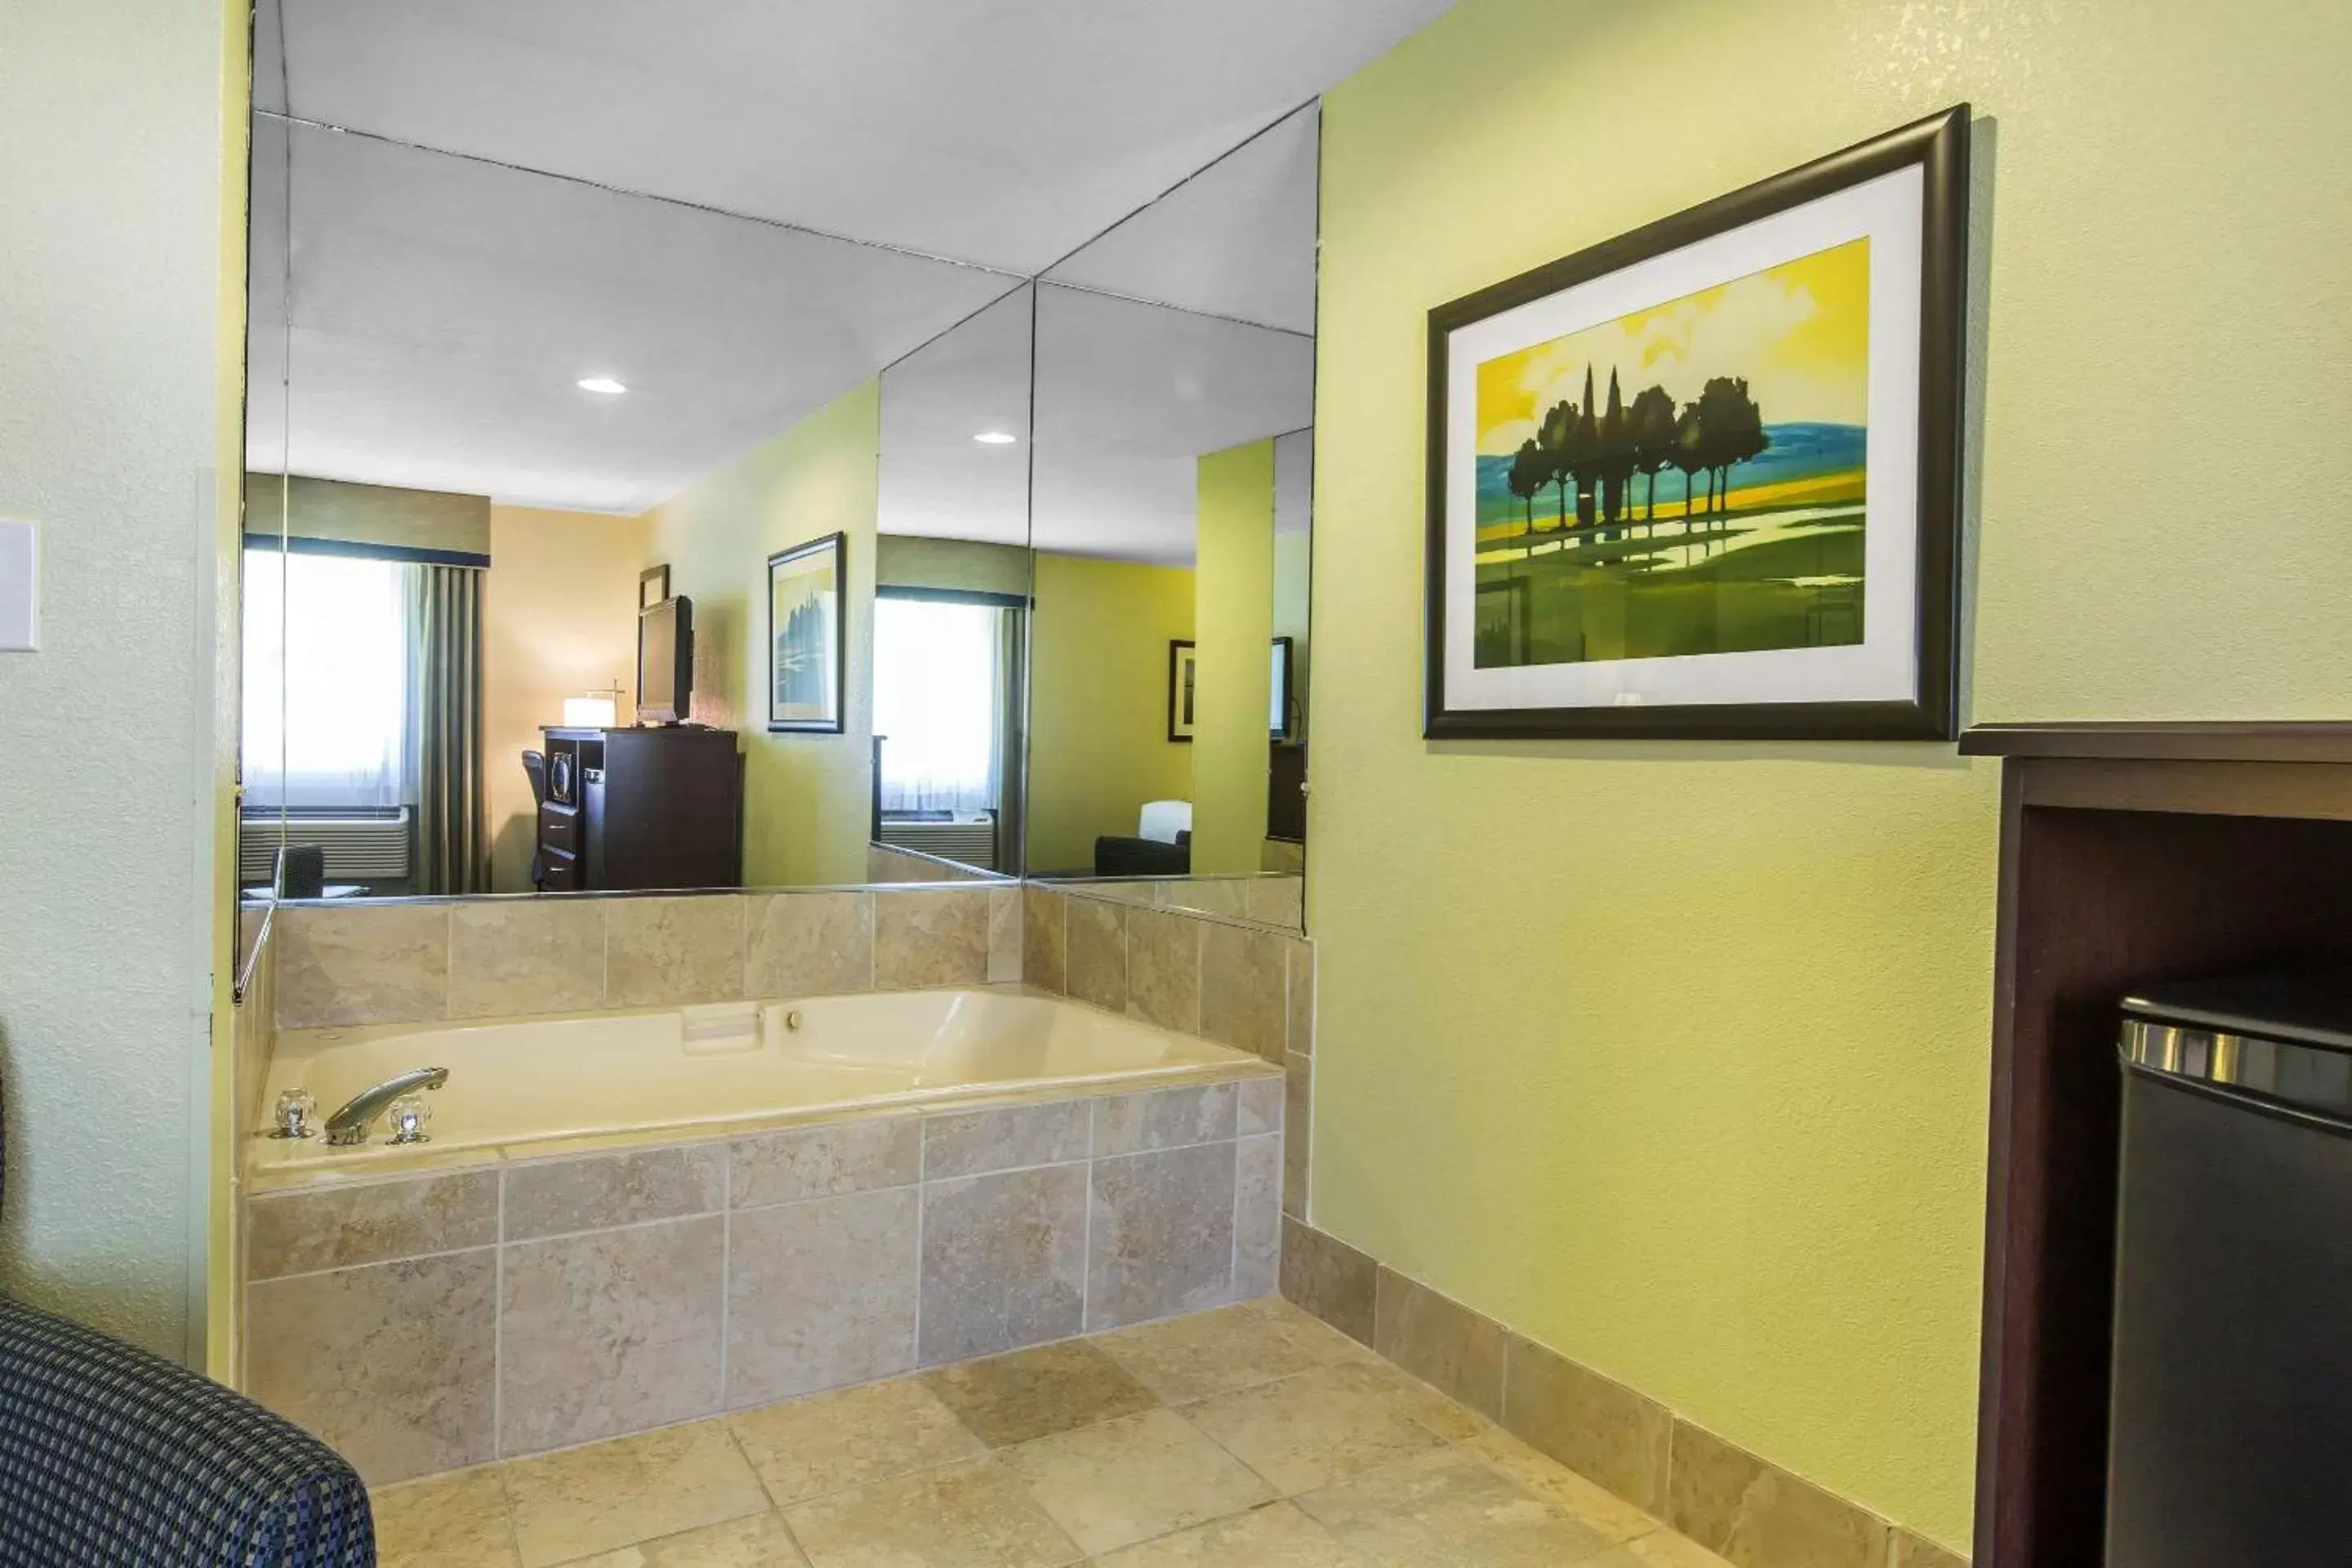 Photo of the whole room, Bathroom in Quality Inn Cedartown